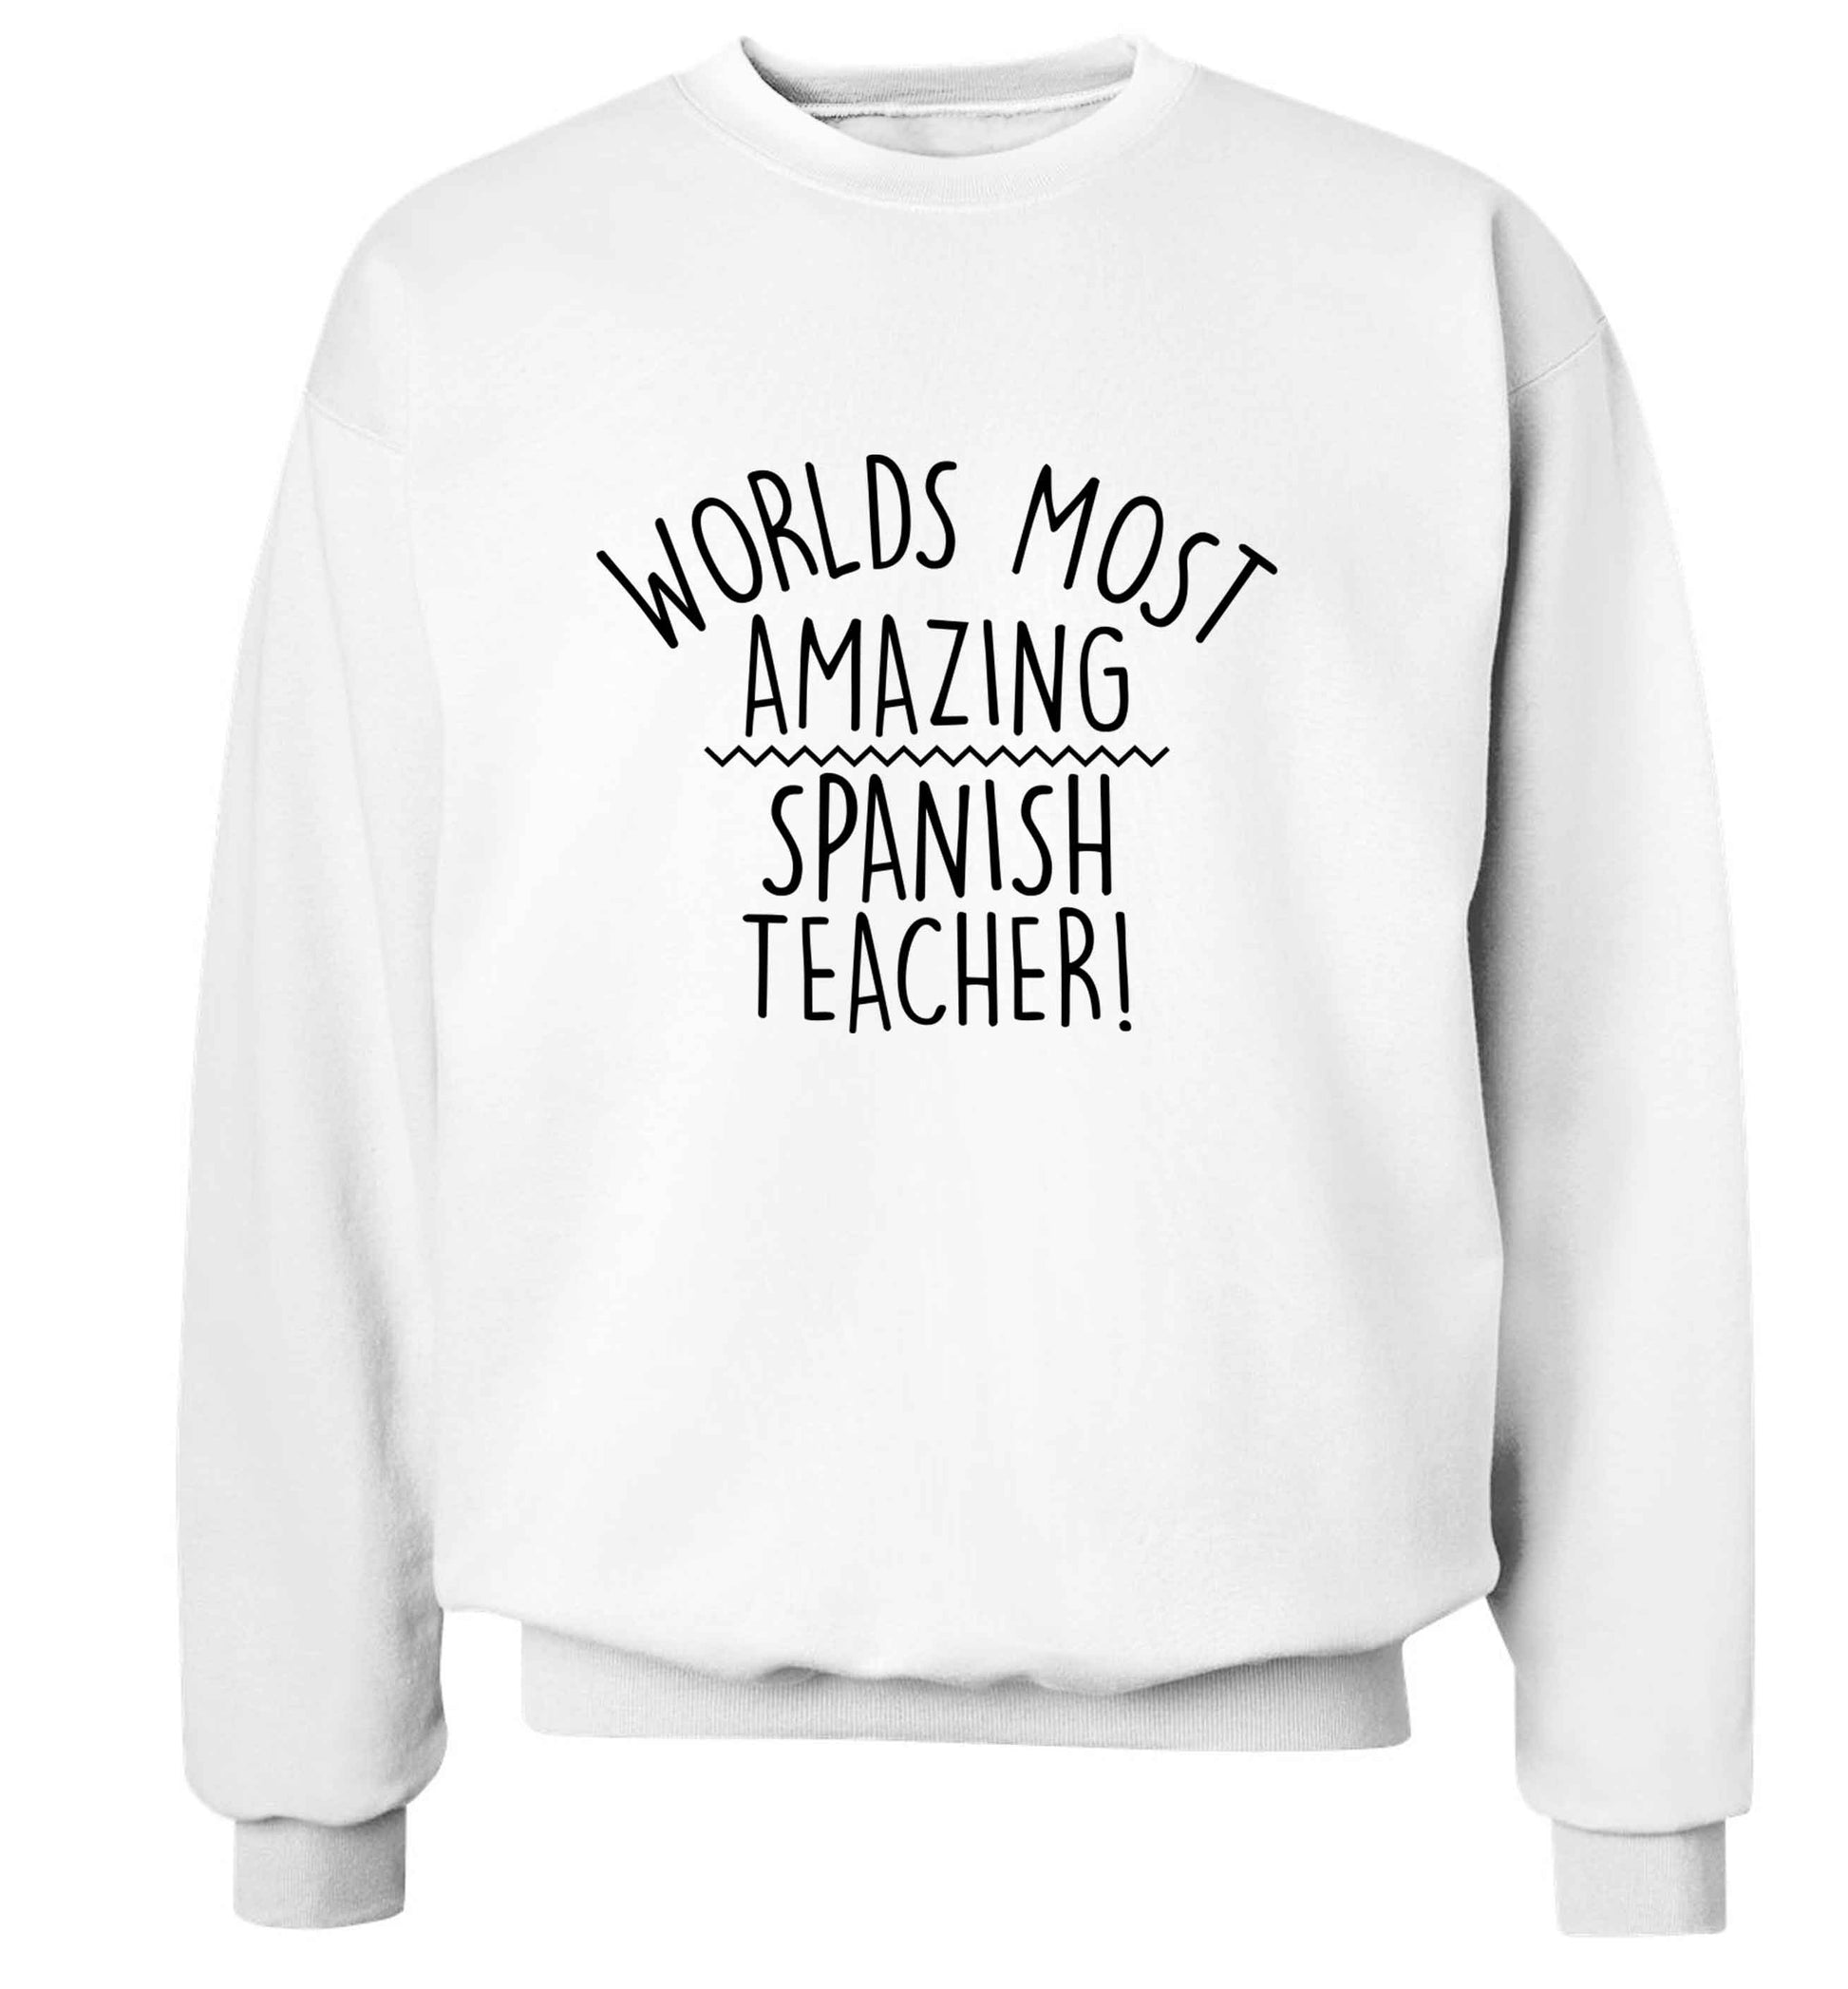 Worlds most amazing Spanish teacher adult's unisex white sweater 2XL